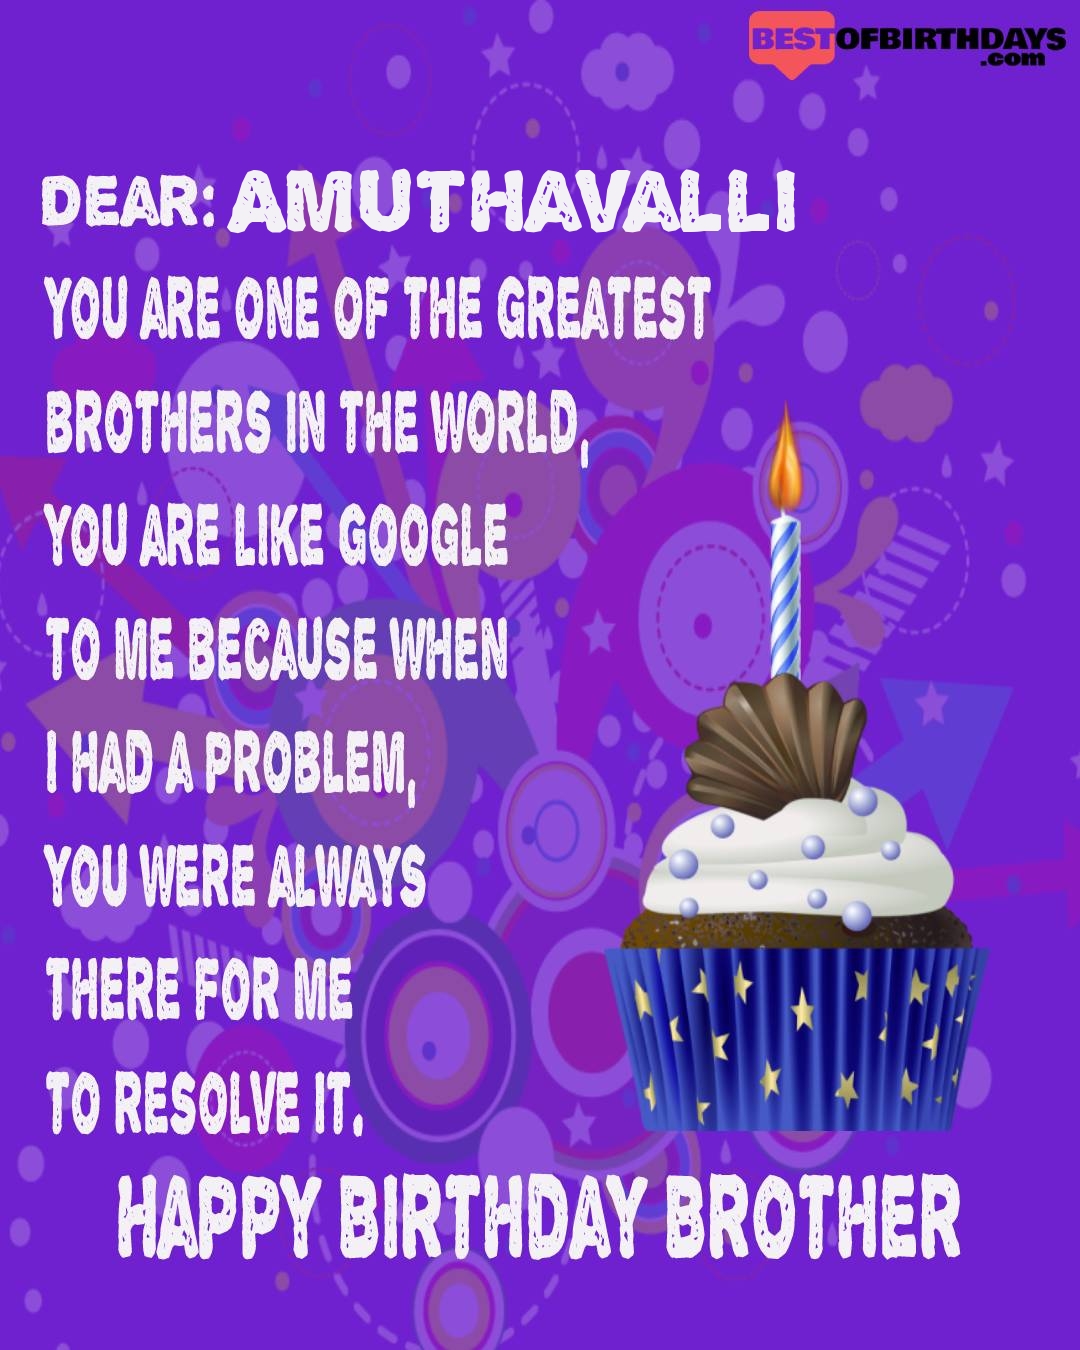 Happy birthday amuthavalli bhai brother bro